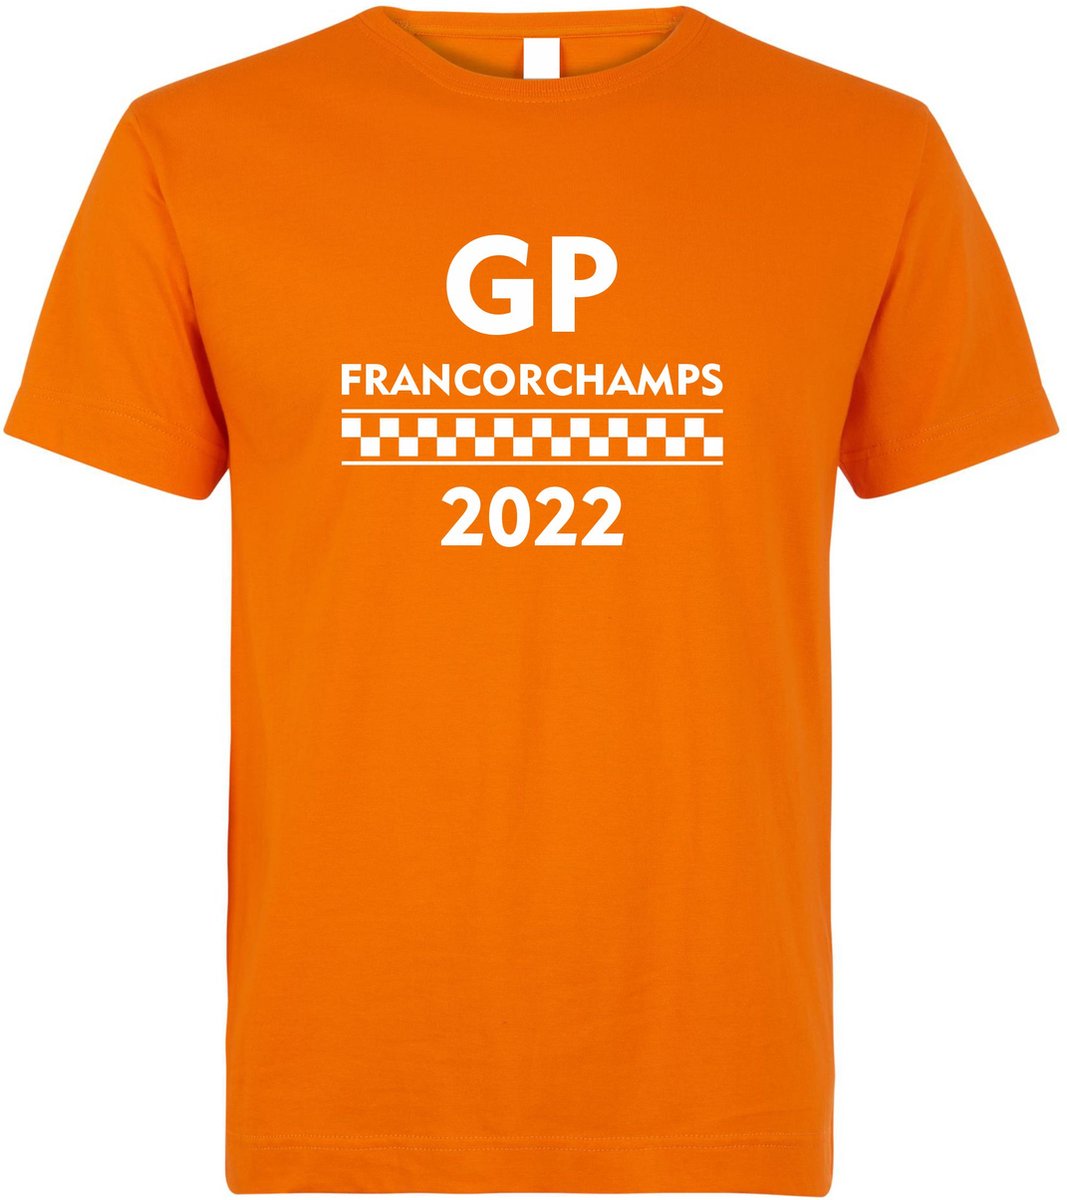 T-shirt kinderen GP Francorchamps 2022 | Max Verstappen / Red Bull Racing / Formule 1 fan | Grand Prix Circuit Spa-Francorchamps | kleding shirt | Oranje | maat 116